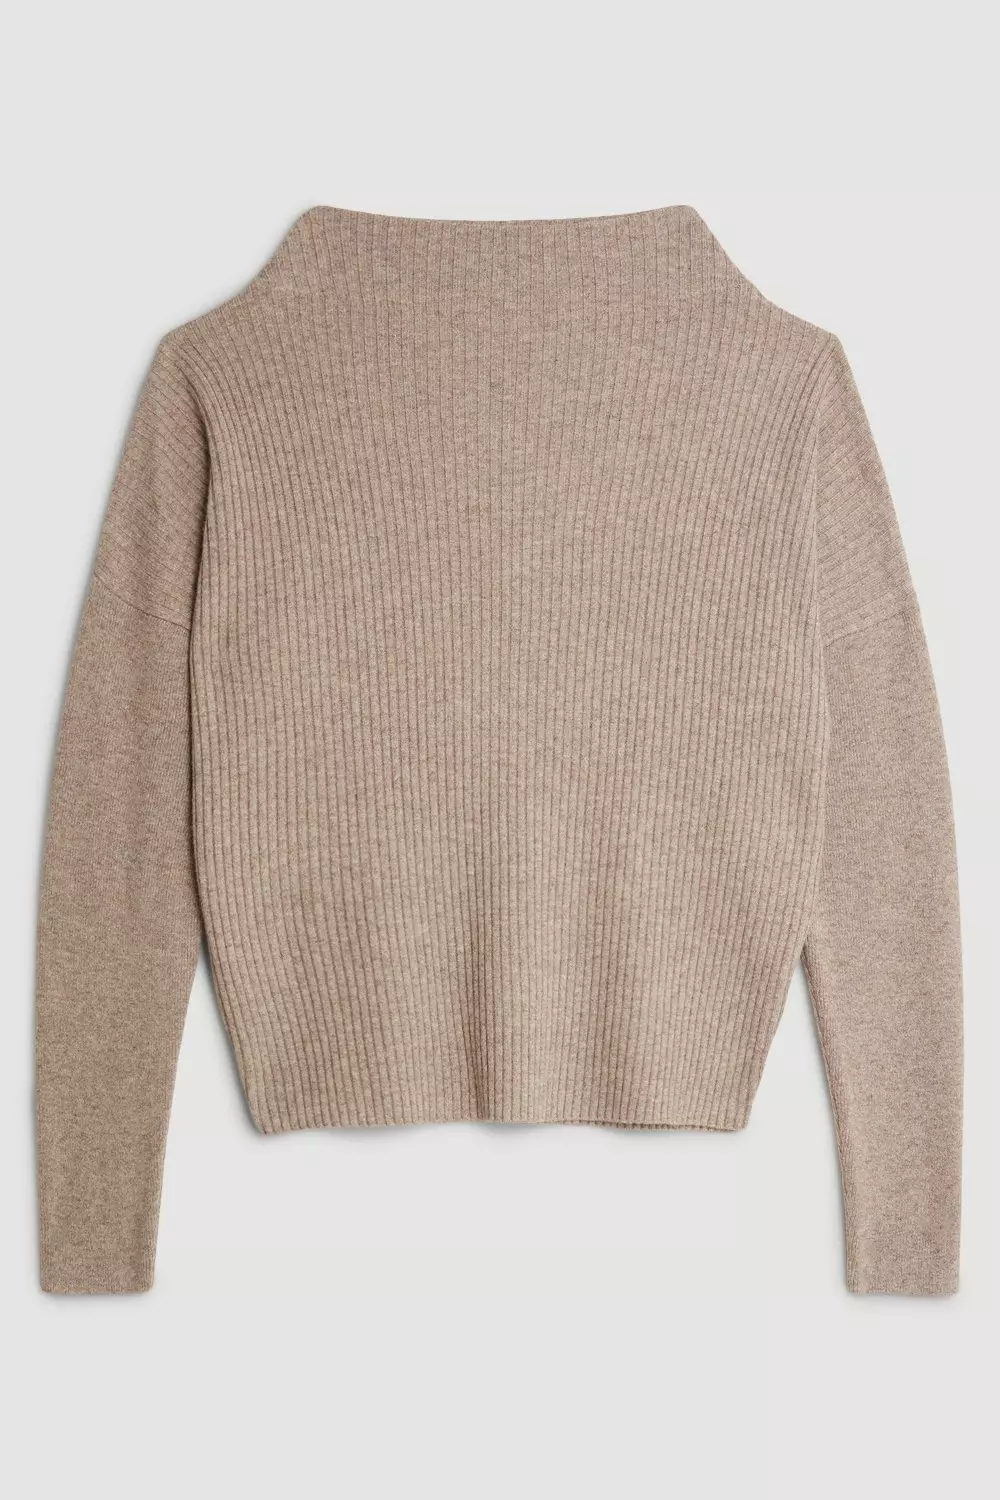 Cashmere Wool Knit Top Co-ord | Karen Millen